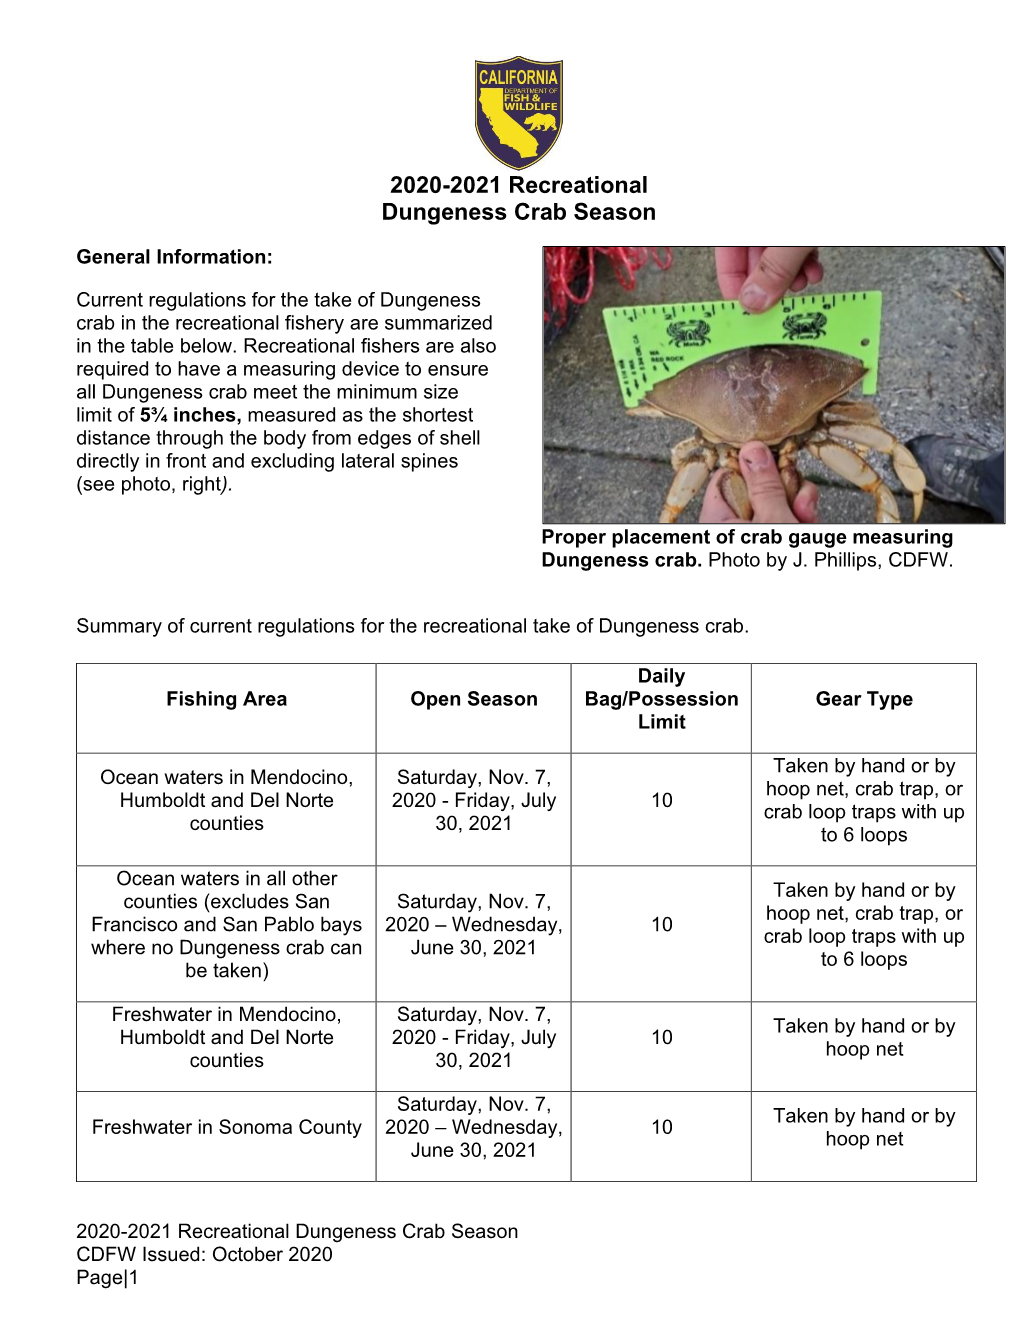 Recreational Dungeness Crab Regulations 2020-21